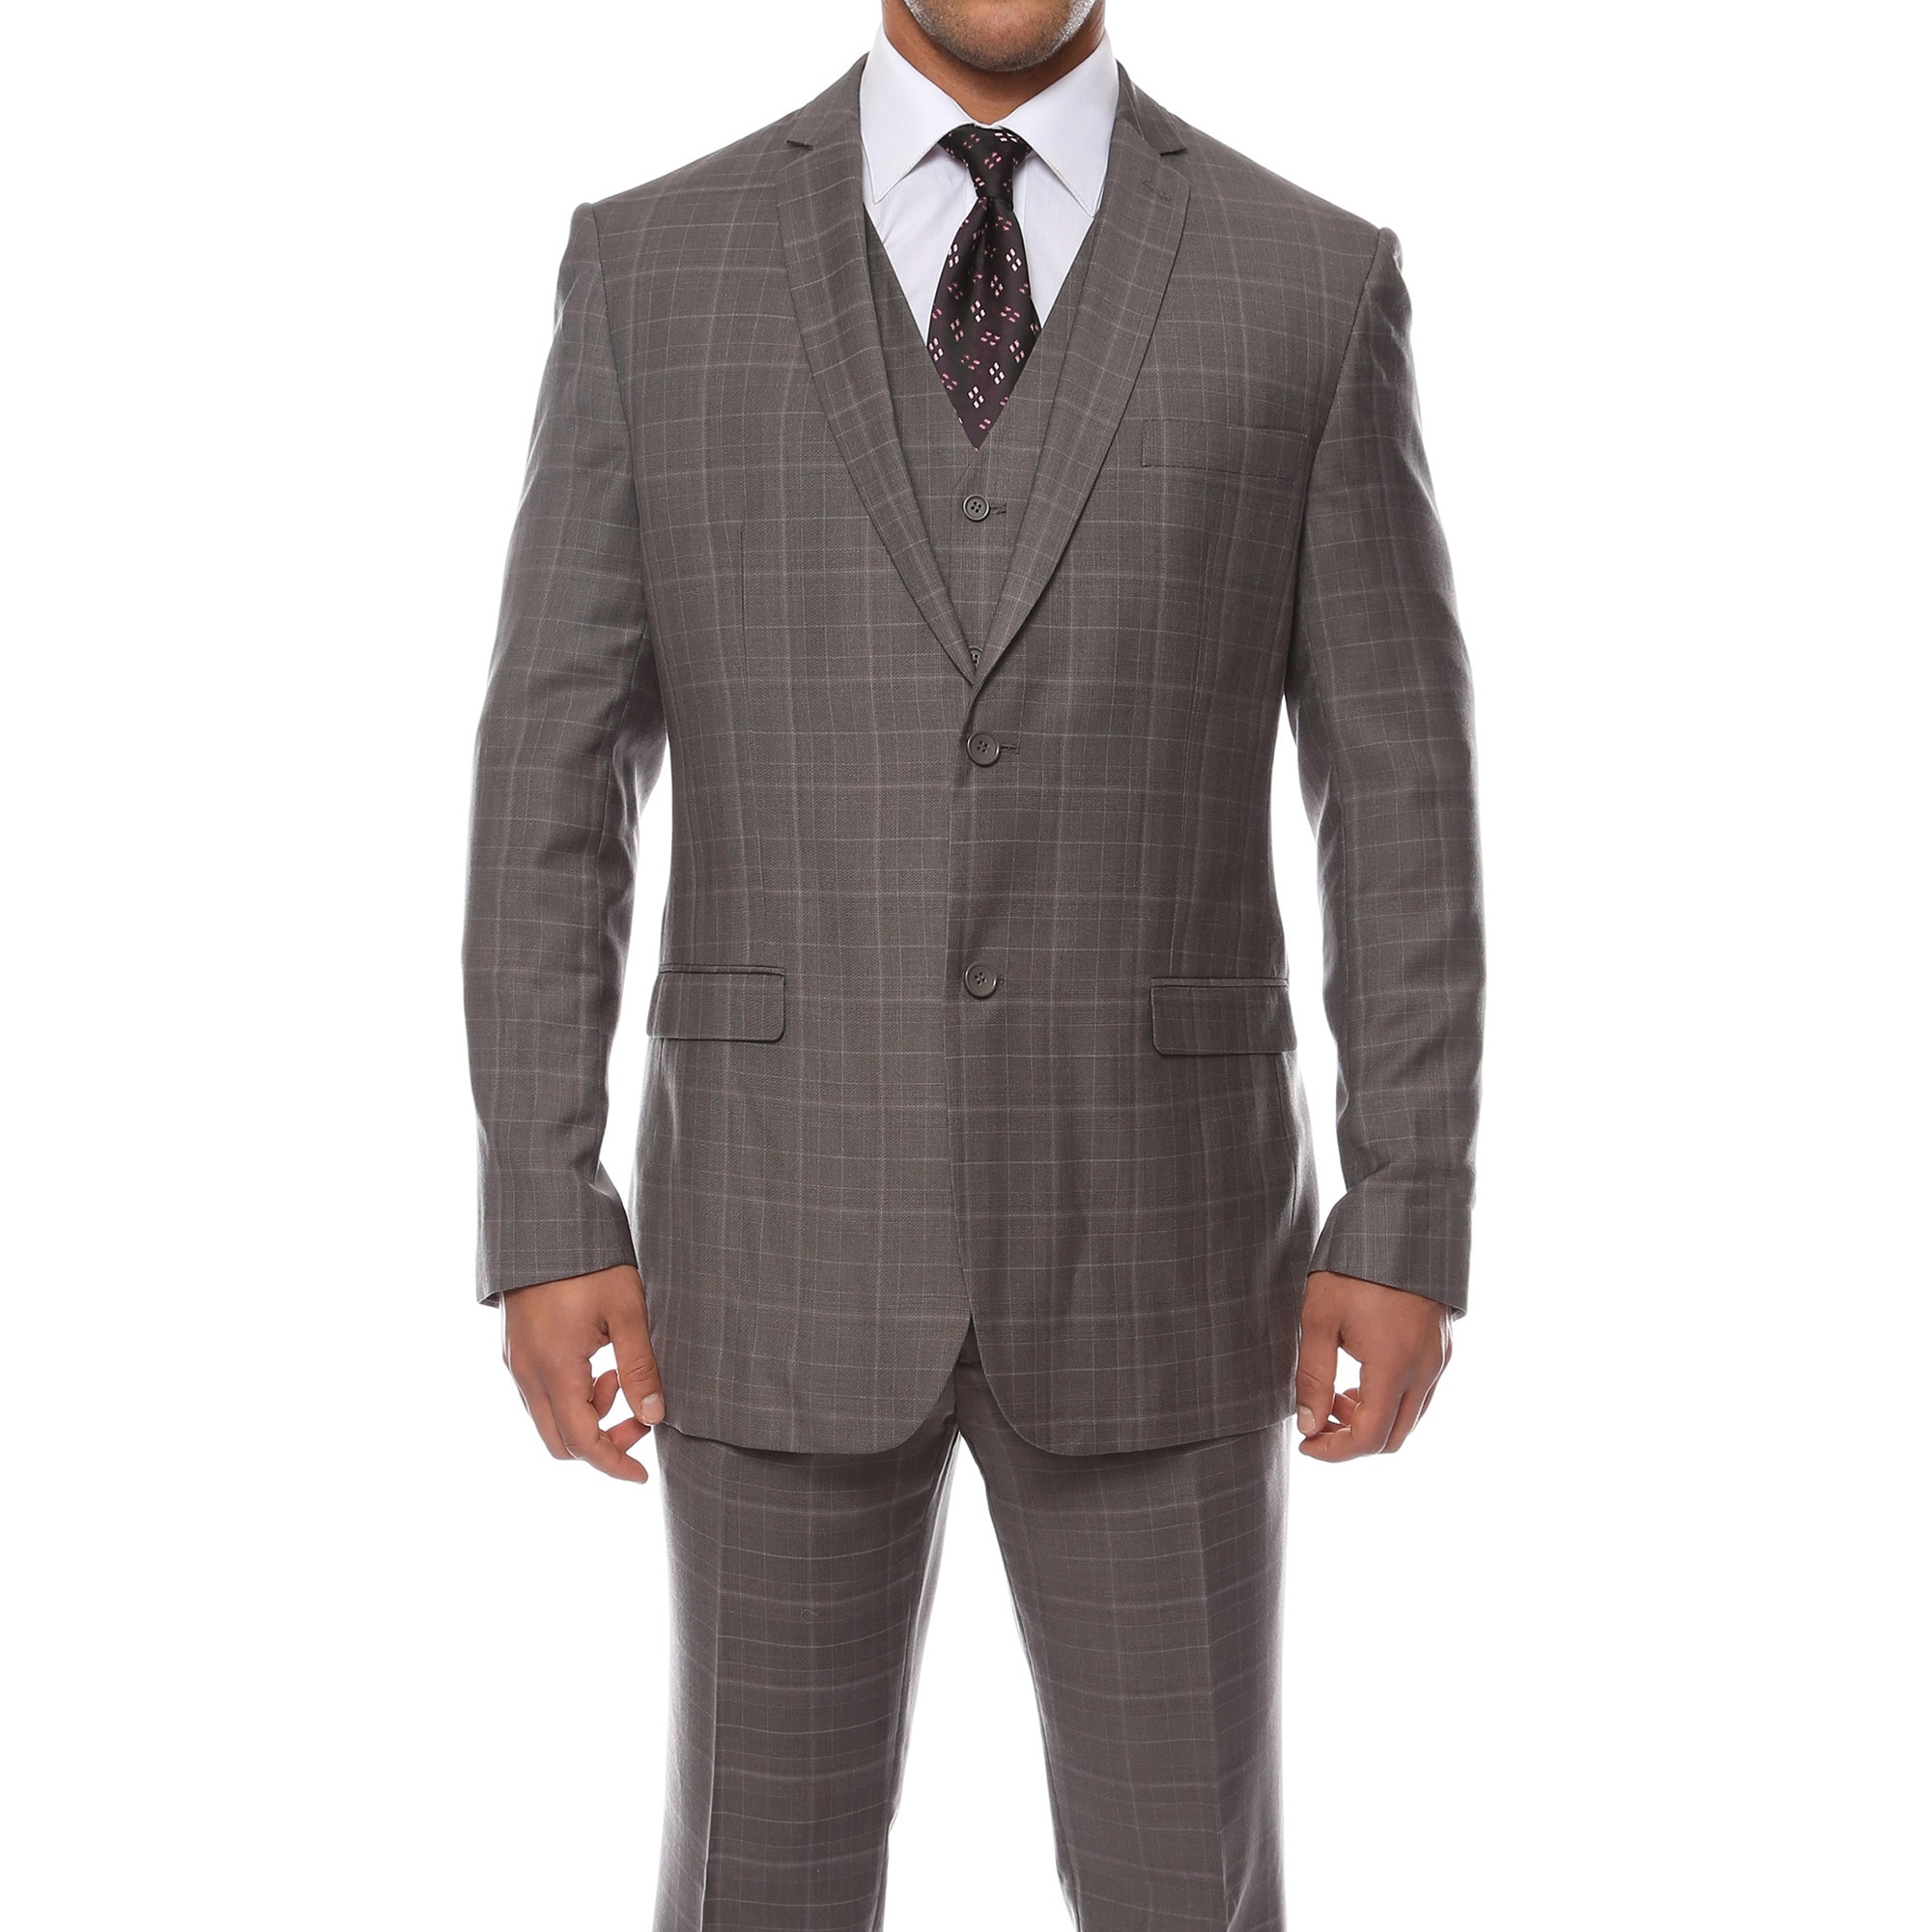 Zonettie By Ferrecci Mens Custom Slim Fit Charcoal Grey Plaid 3 piece Vested Suit